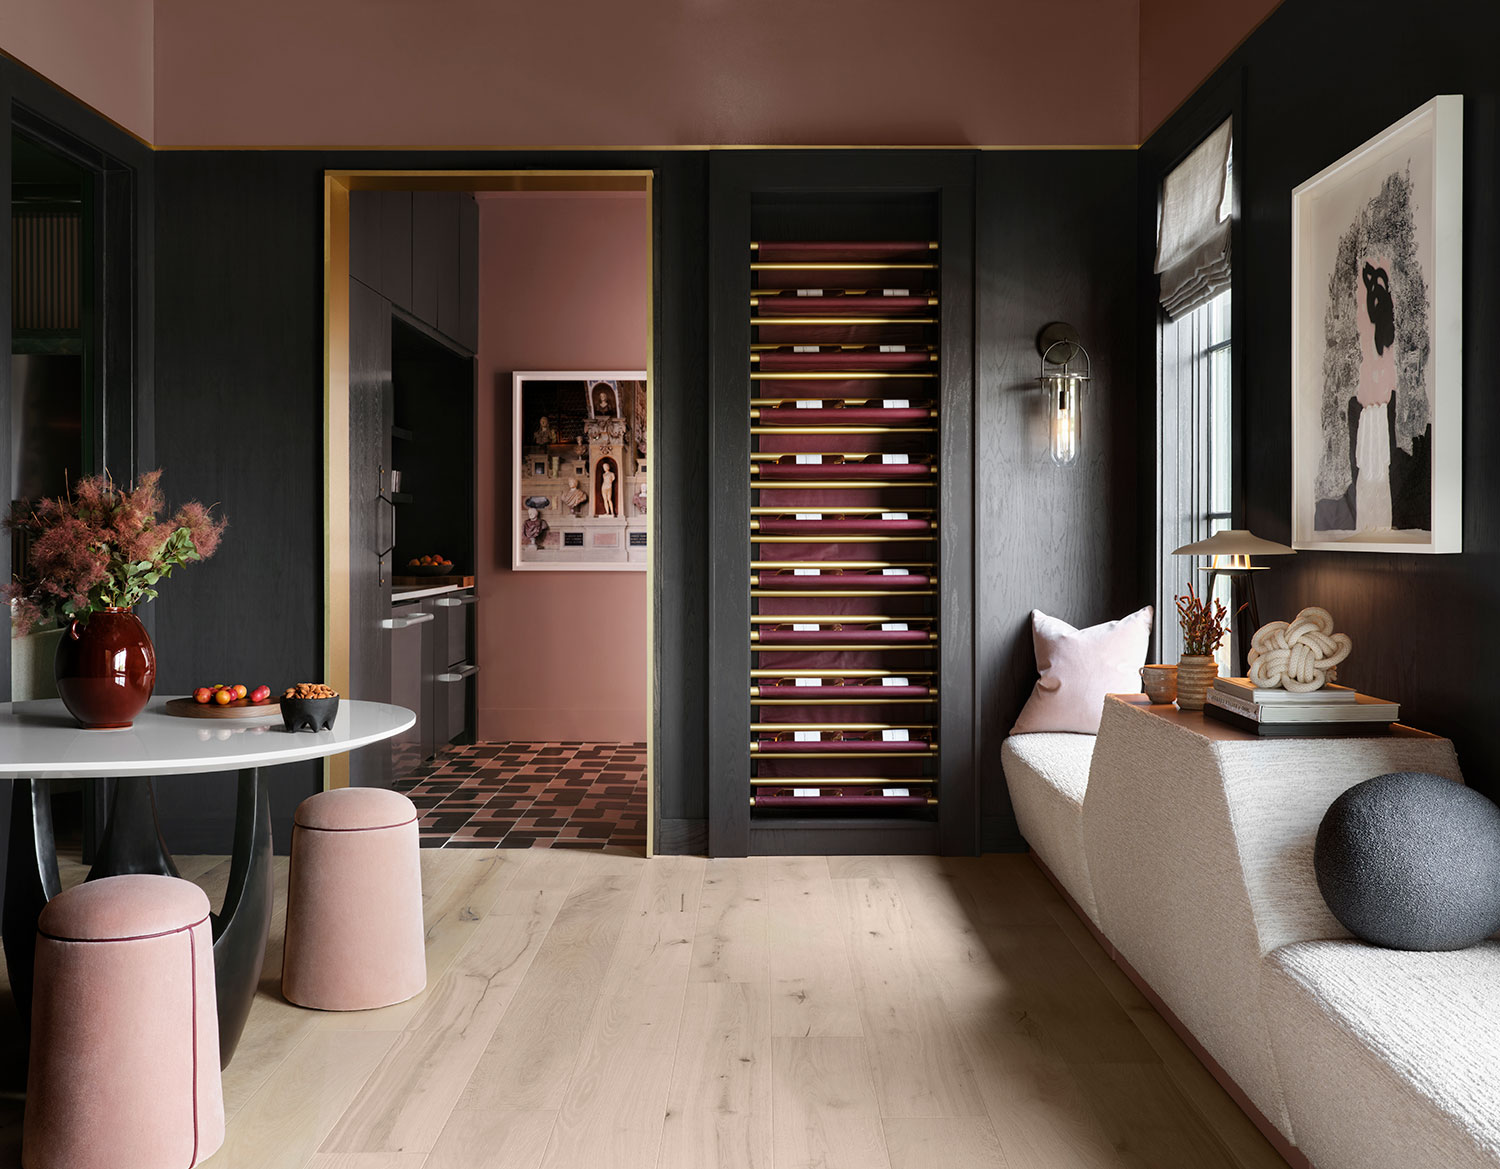 2022 kitchen designs pink and black wine storage room by jean liu